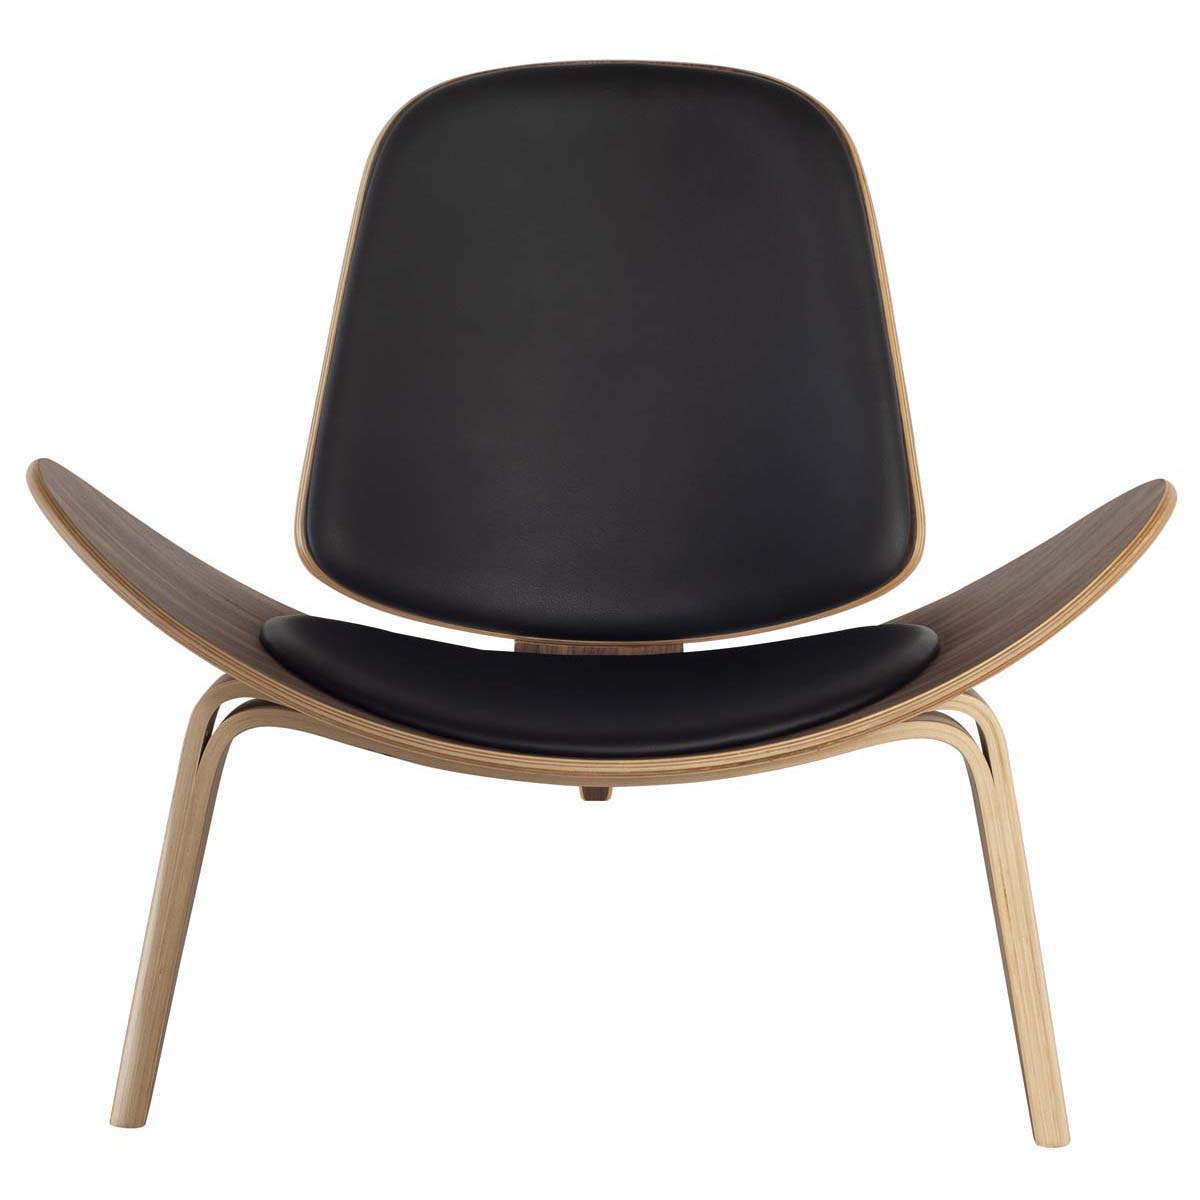 Nuevo Artemis Occasional Chair - Black